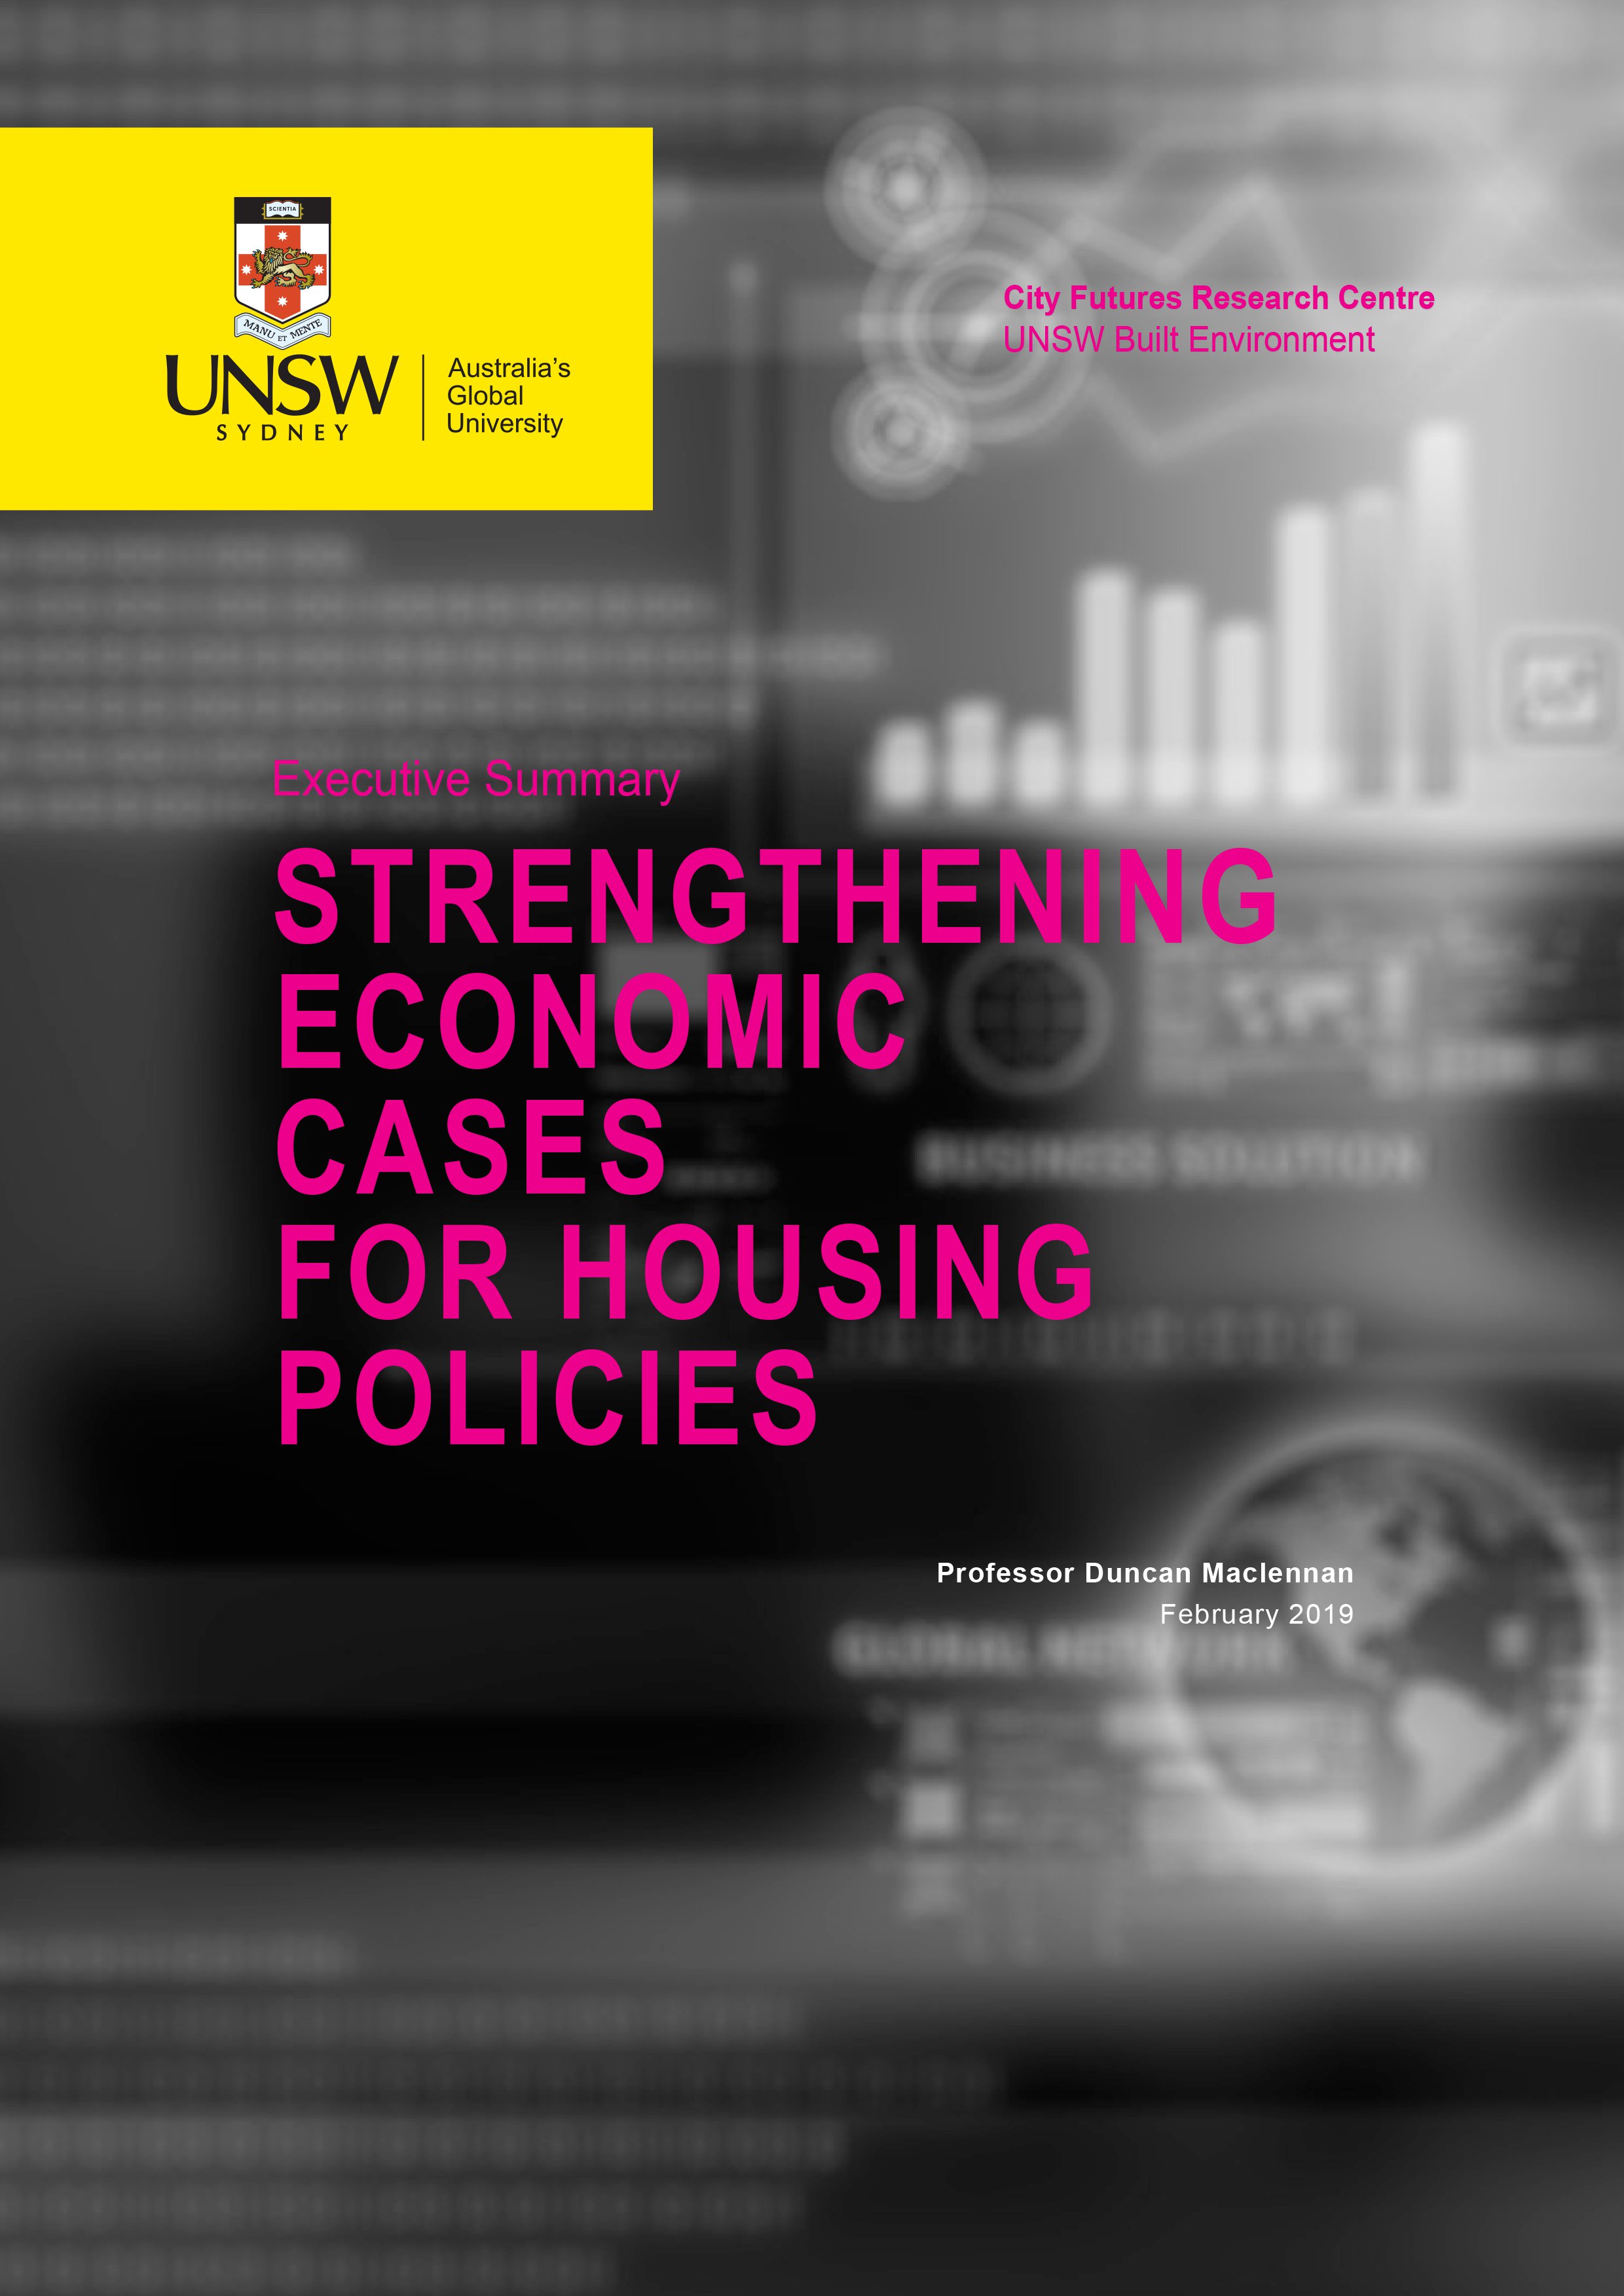 Executive Summary - Strengthening economic cases for housing